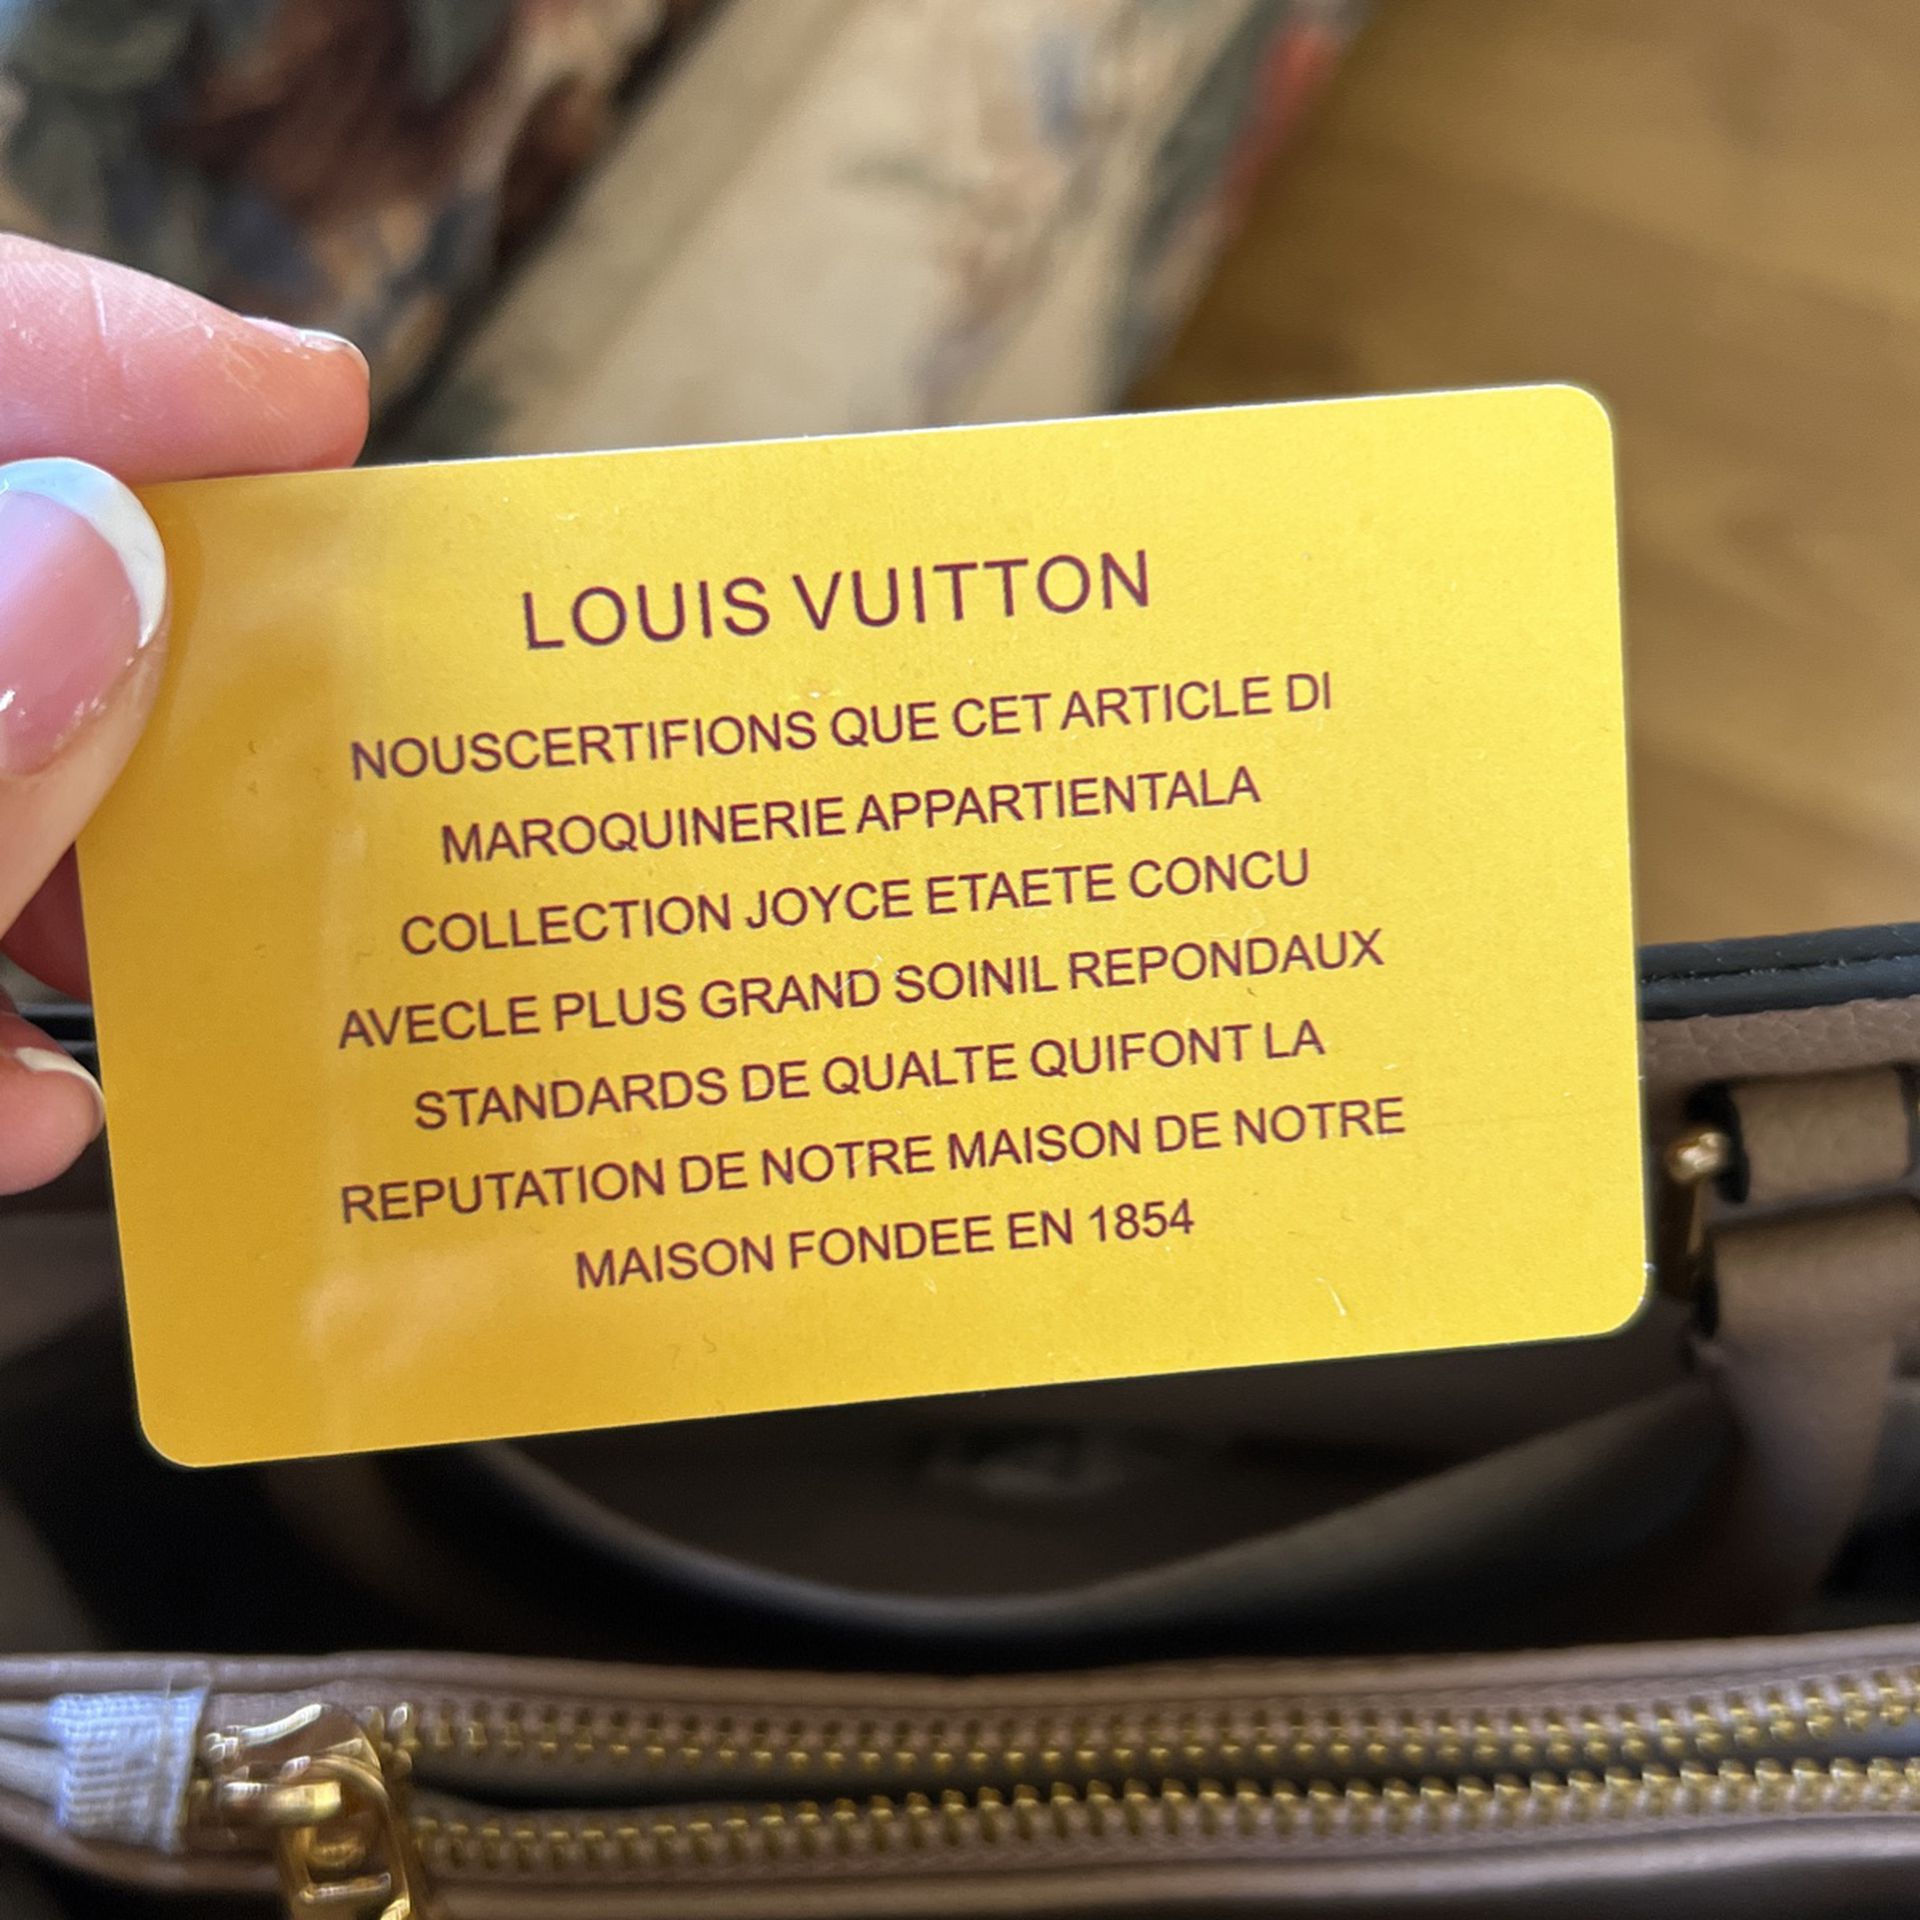 Authentic!! Louis Vuitton Large Saumur Bag & Wallet for Sale in Montebello,  CA - OfferUp